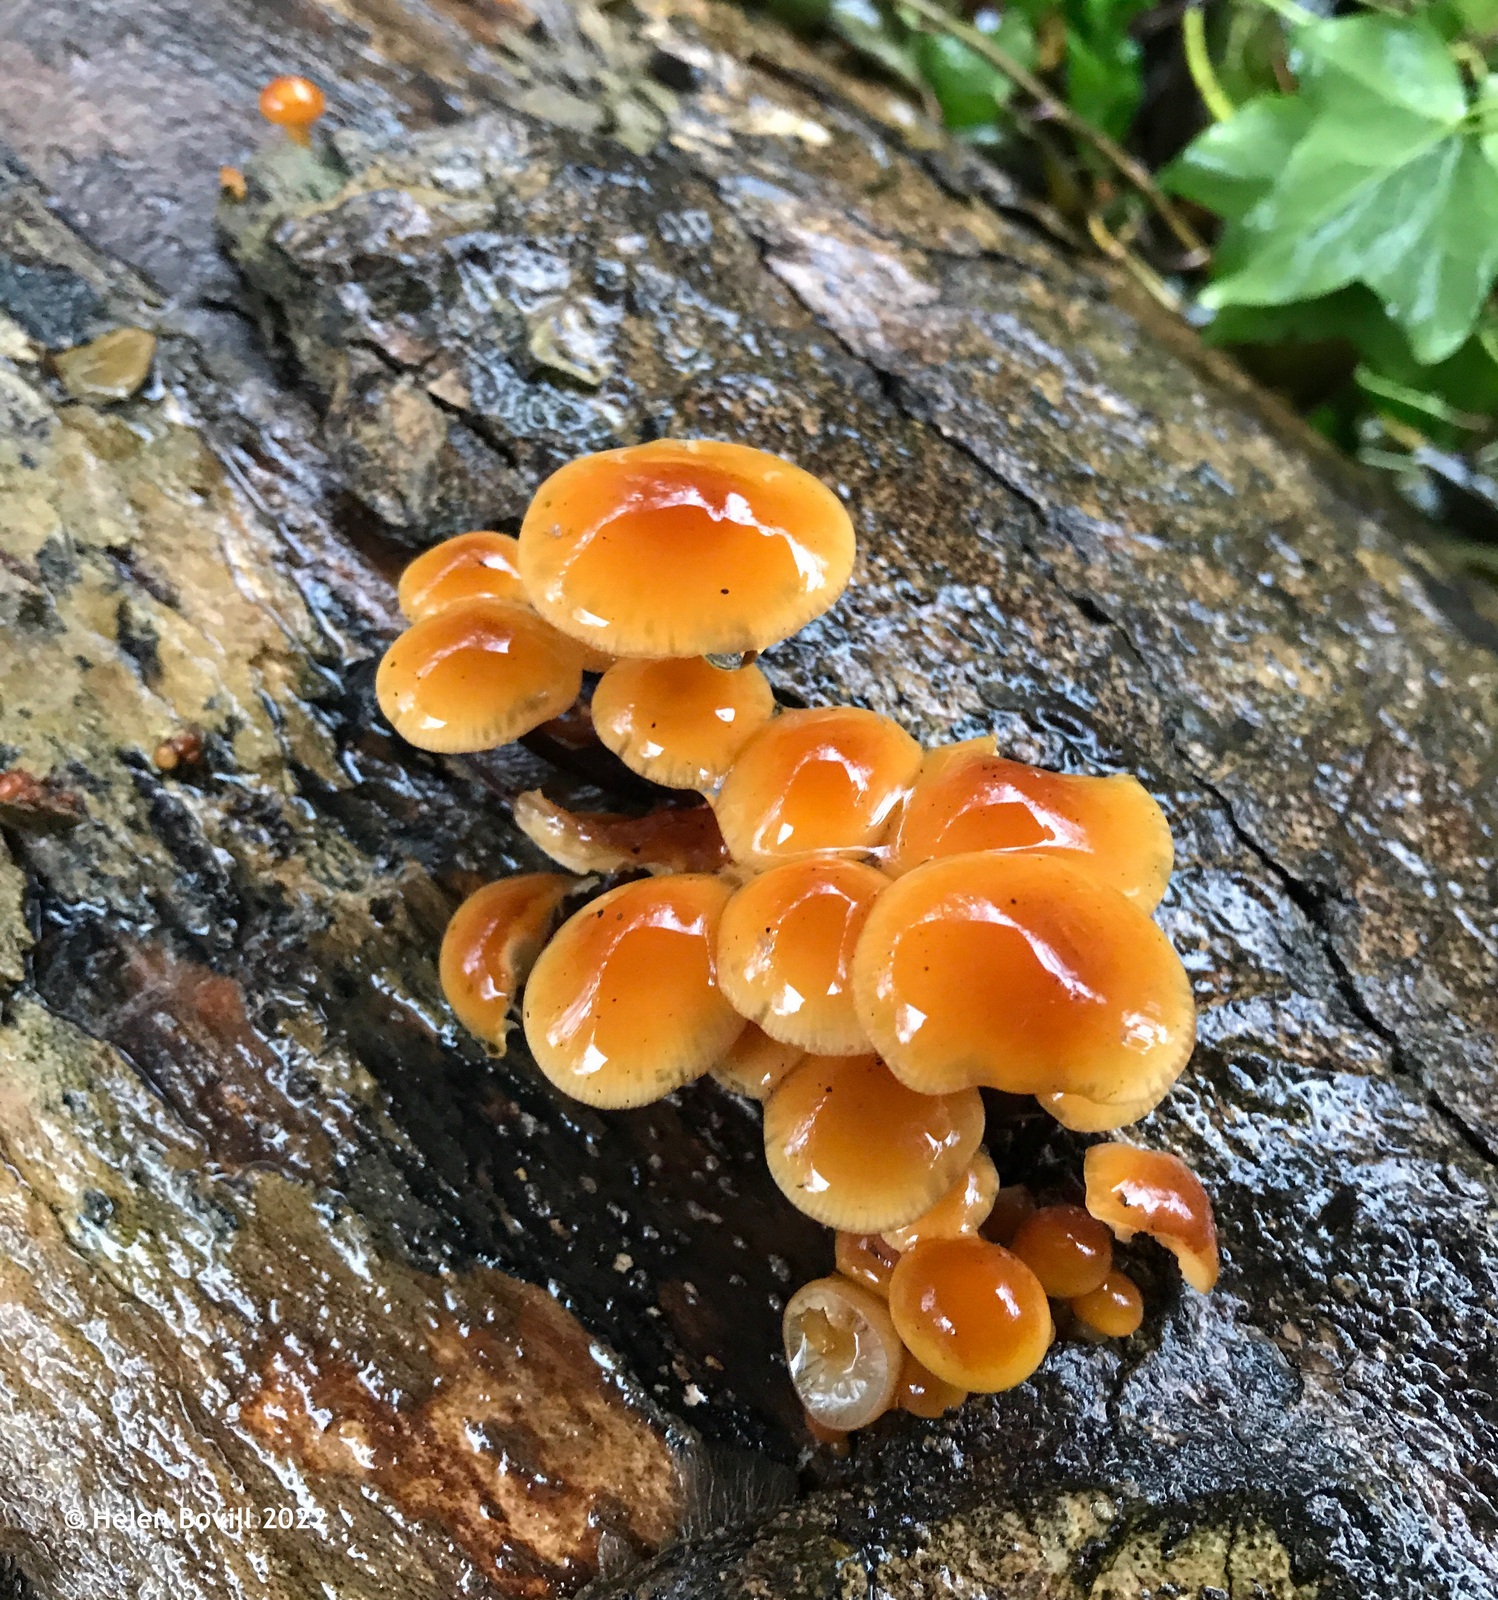 Velvet Shank Mushrooms growing on a log in the cemetery